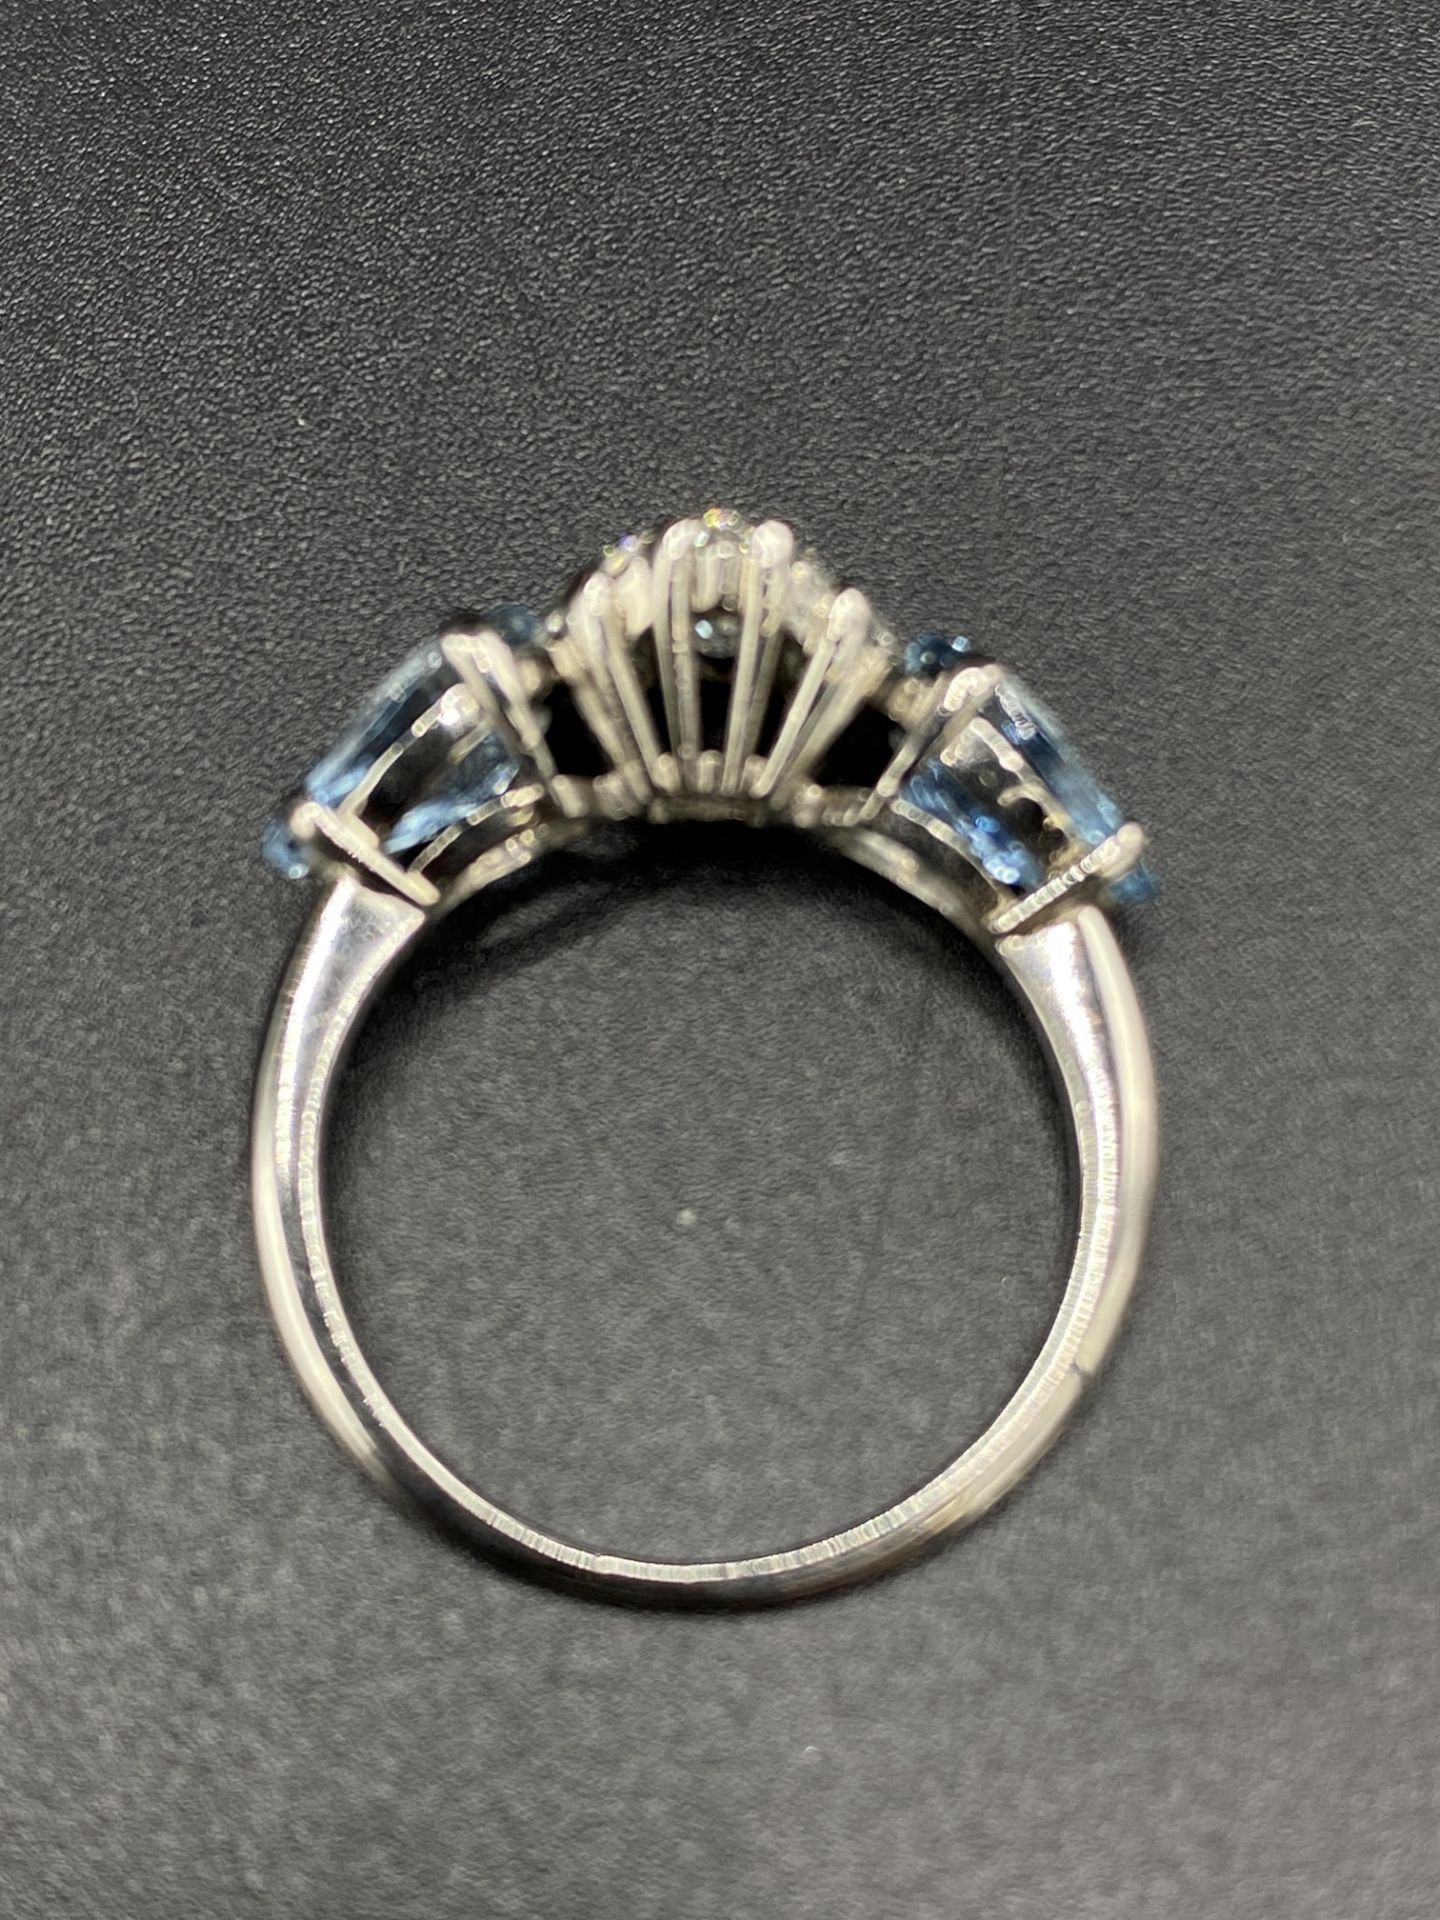 White gold, aquamarine and diamond ring - Image 5 of 5